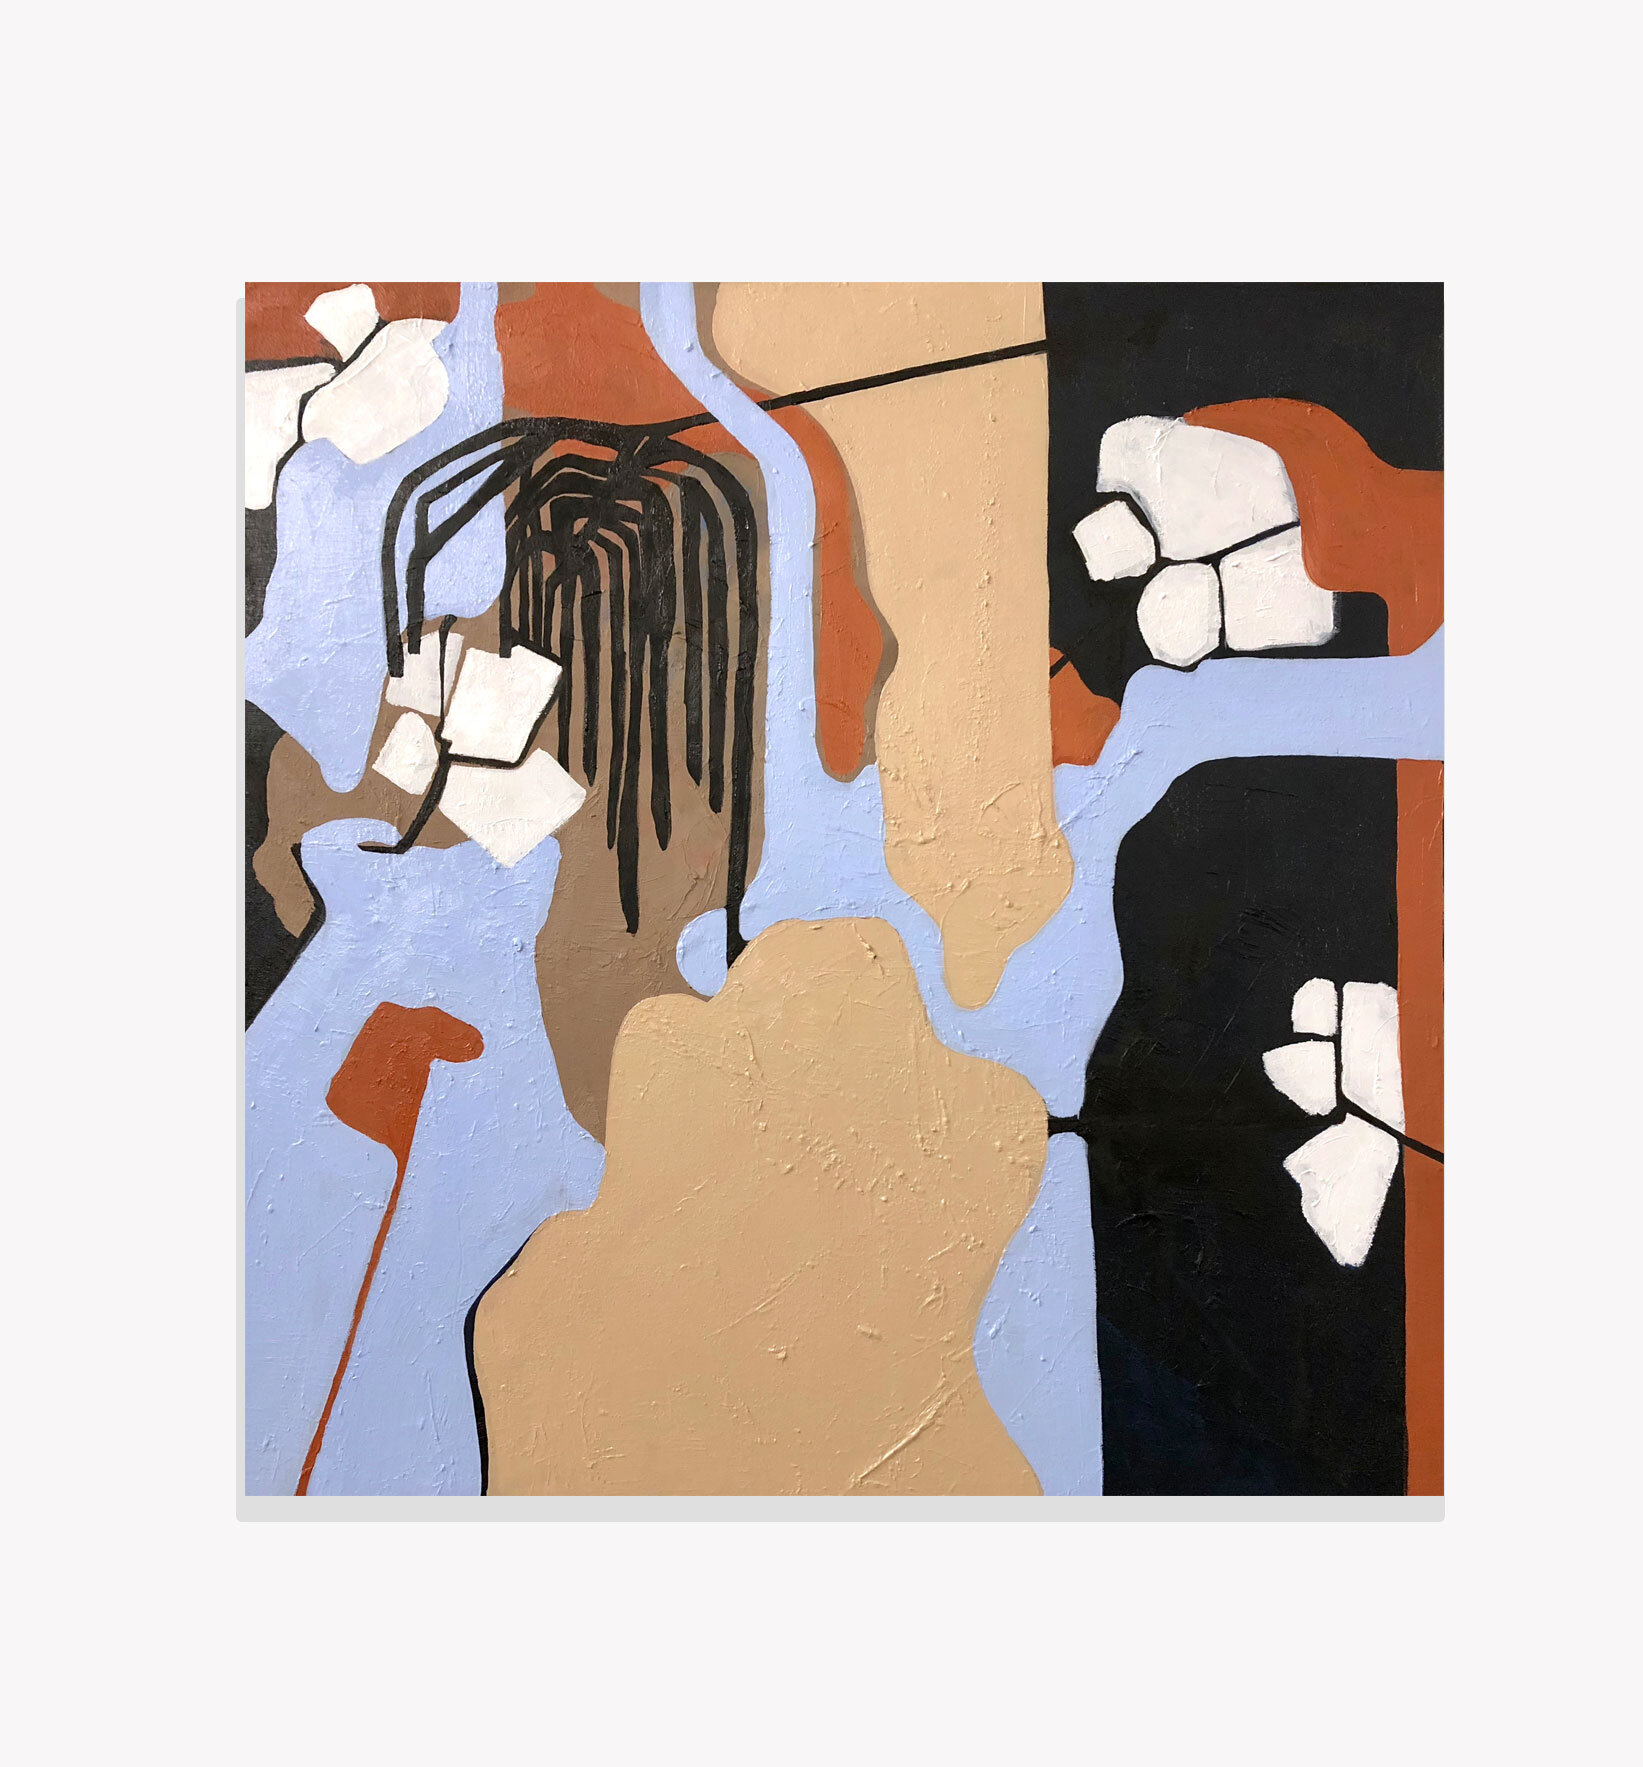   Shade , Kristi Head 2018. Oil on canvas, 30 x 30 inches. 